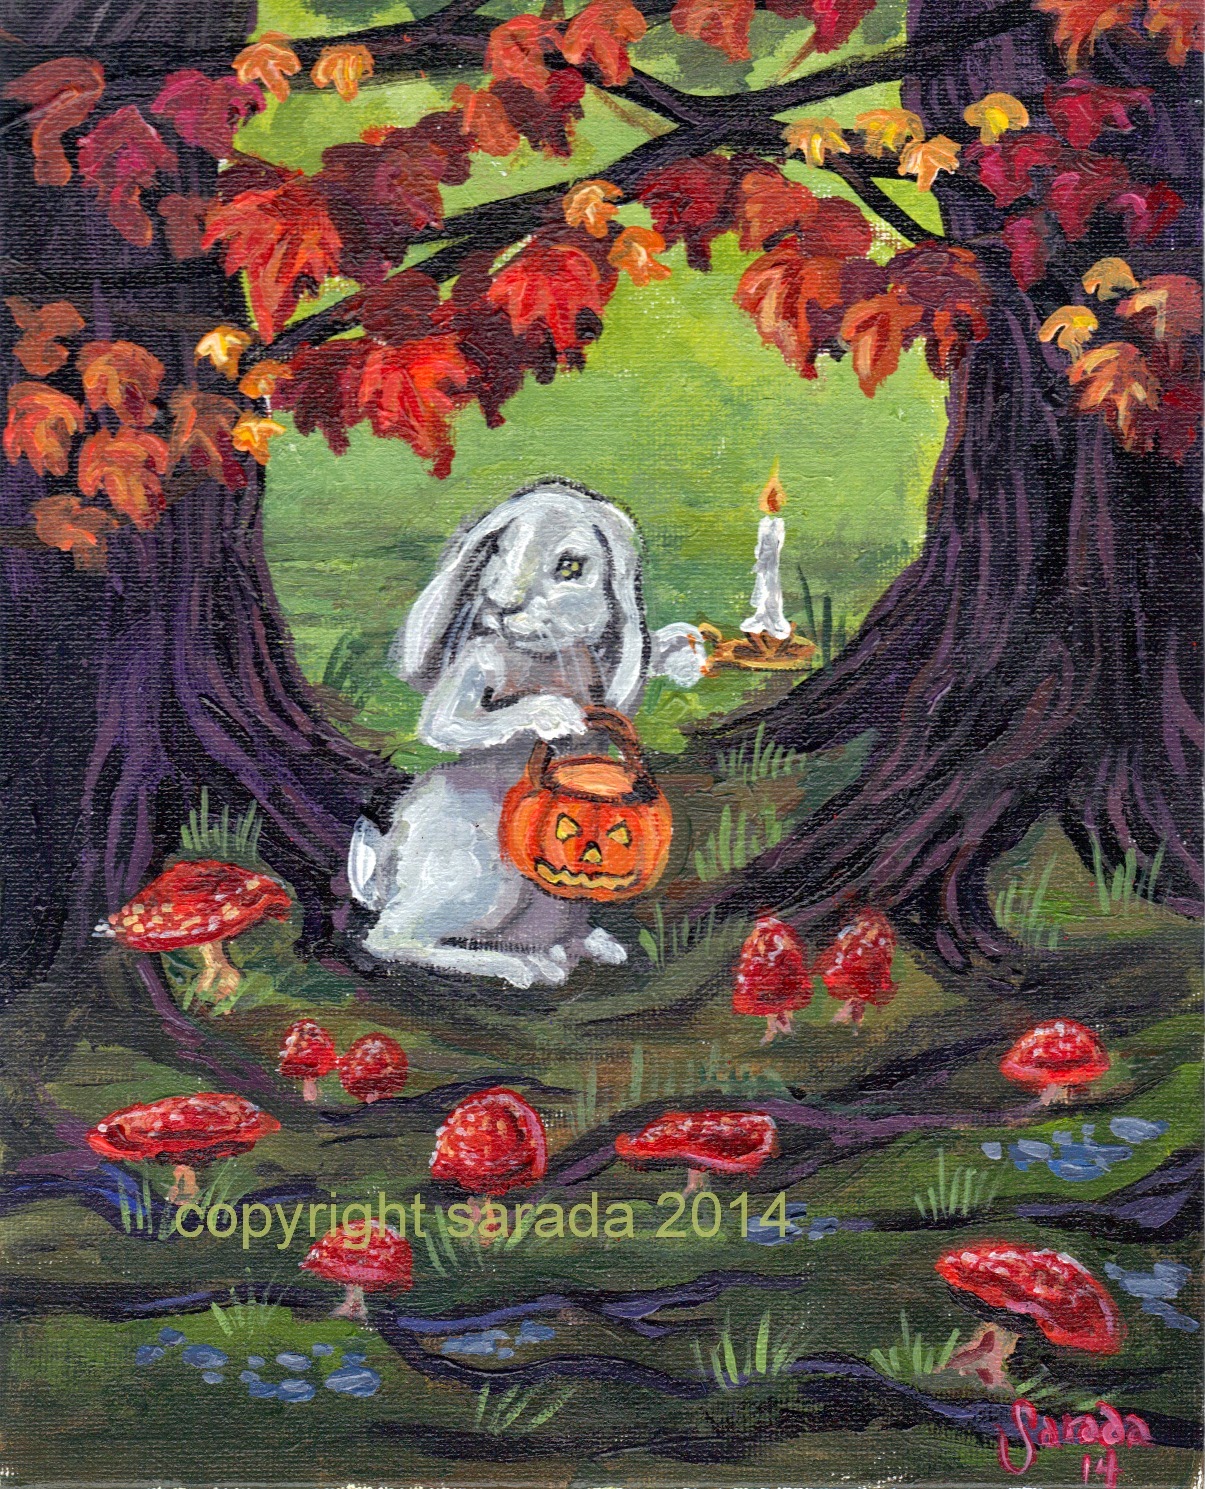 https://www.etsy.com/listing/198305456/halloween-painting-original-8-x-10?ref=listing-shop-header-0